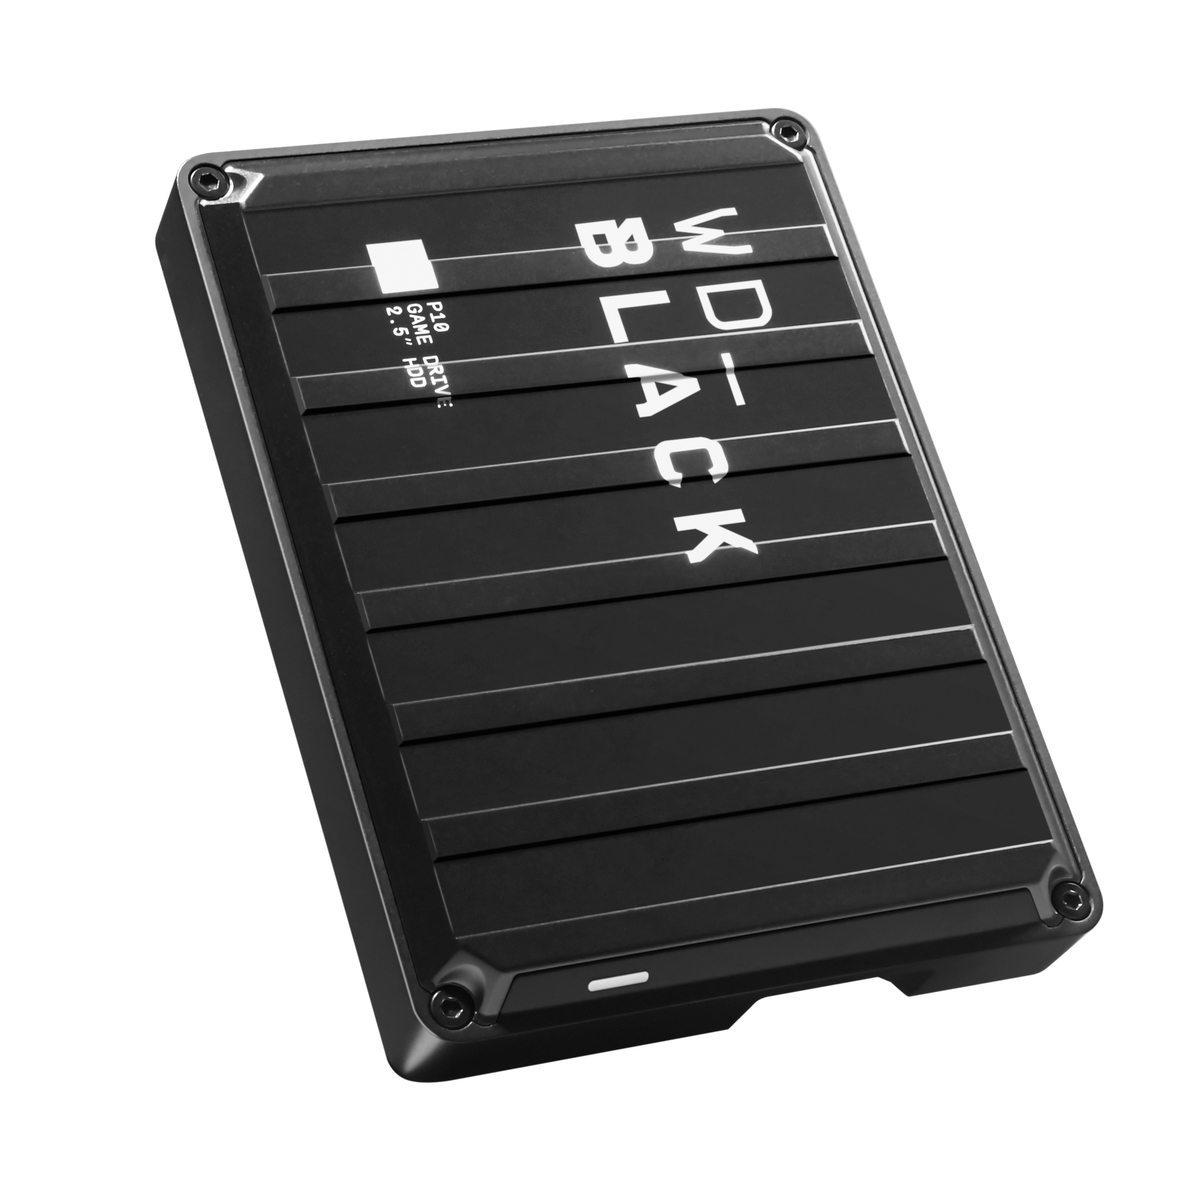 Externe Festplatte 5 TB WD BLACK P10 GAME DRIVE